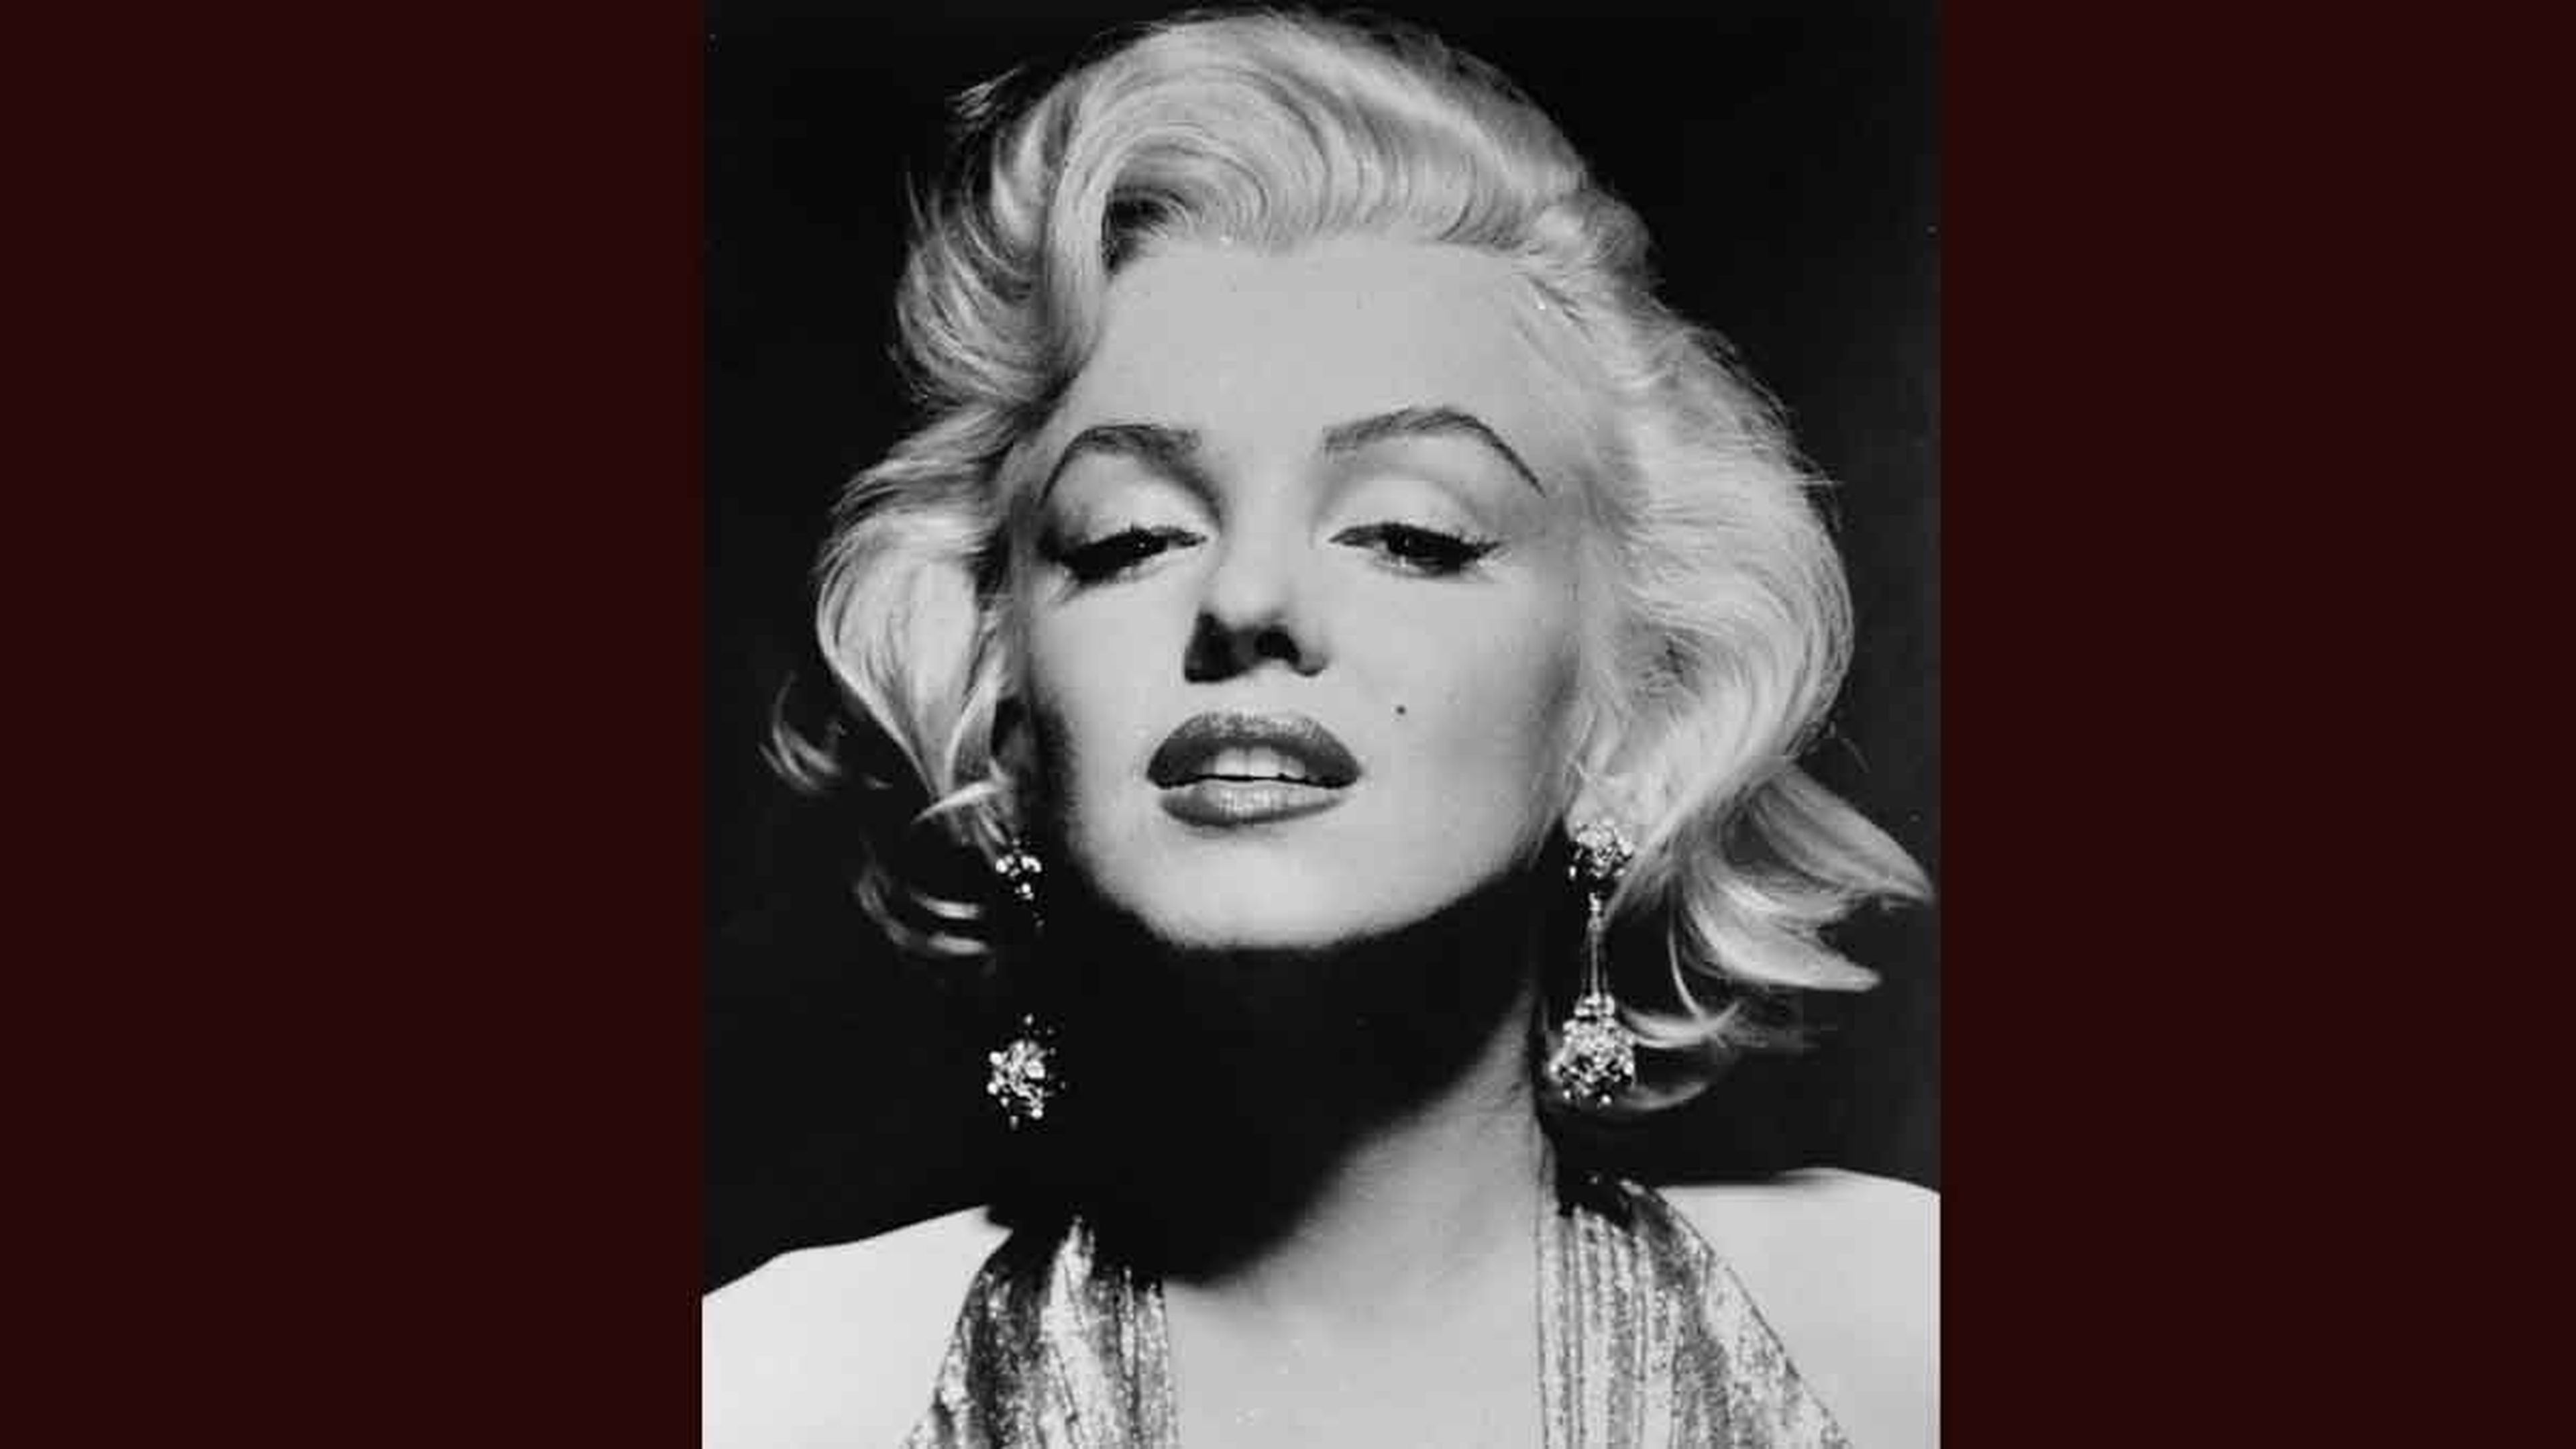 9. Marilyn Monroe 89.41%